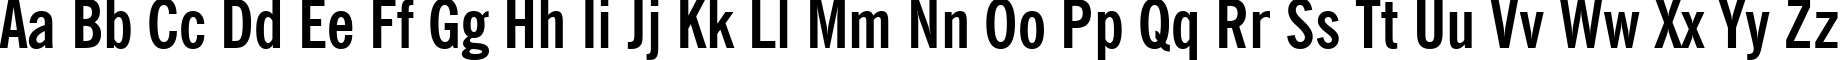 Пример написания английского алфавита шрифтом News Gothic Bold Condensed BT